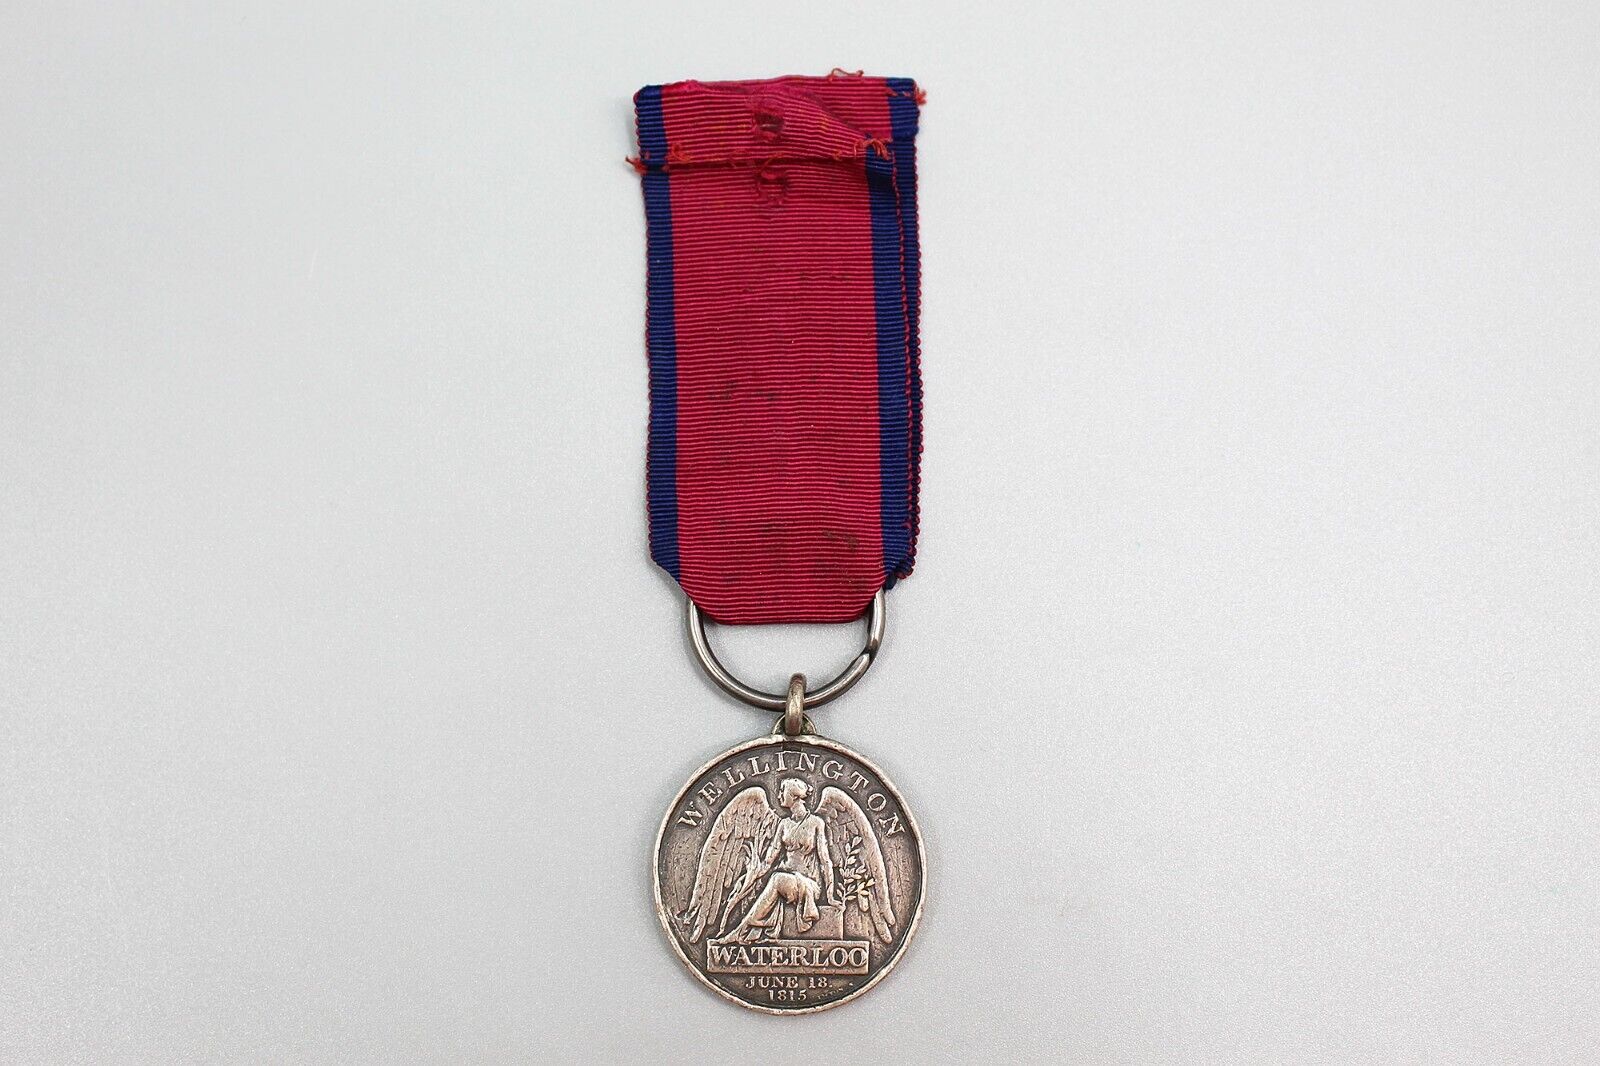 British Waterloo Medal 1815 – 40th Foot Regiment (Repaired Suspension) . BM491